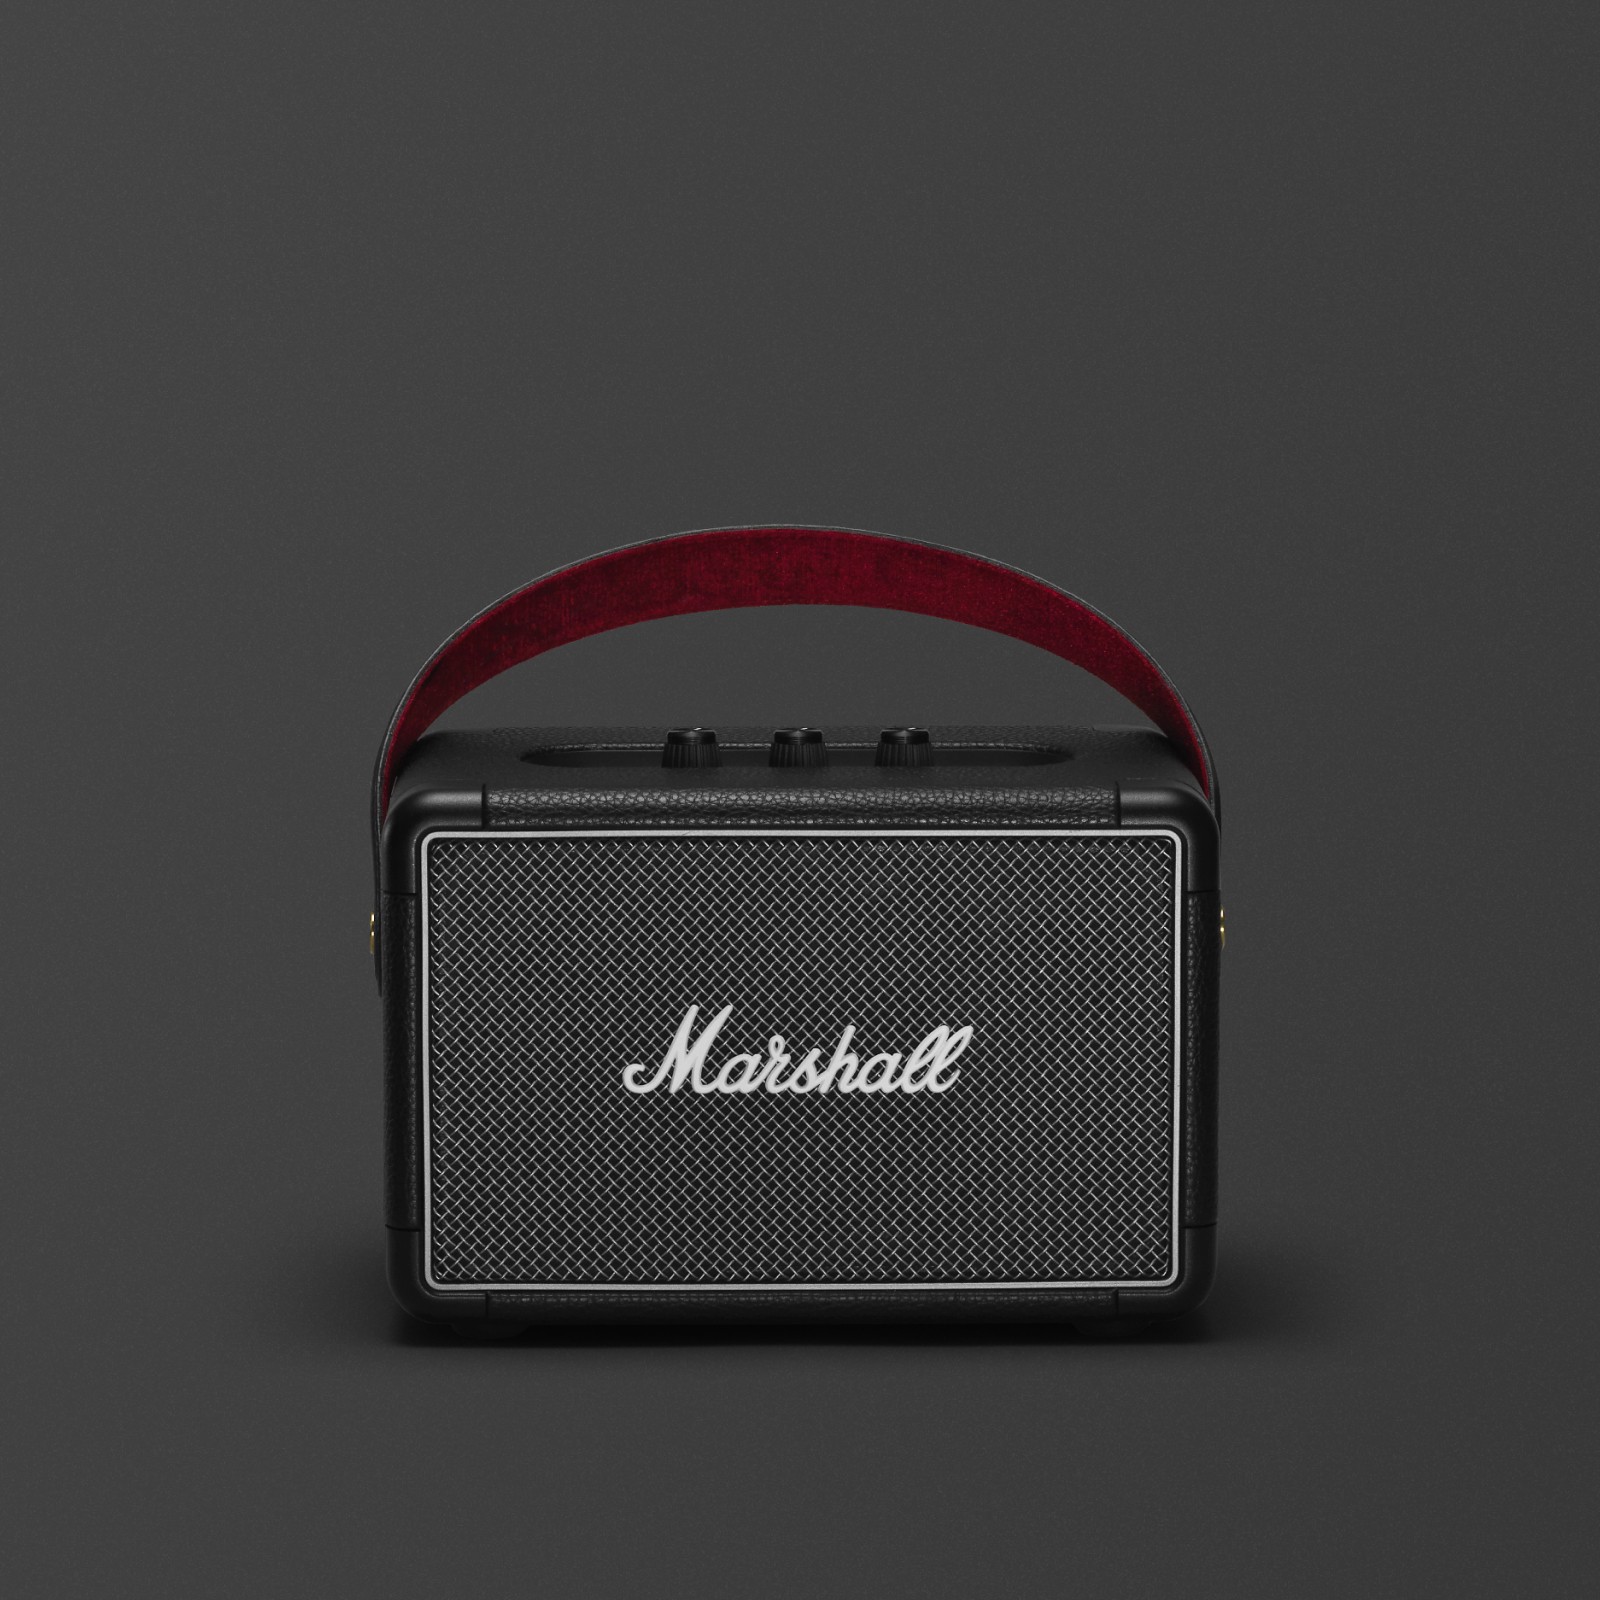 Kilburn II portable speaker with powerful sound and long playtime |  Marshall.com